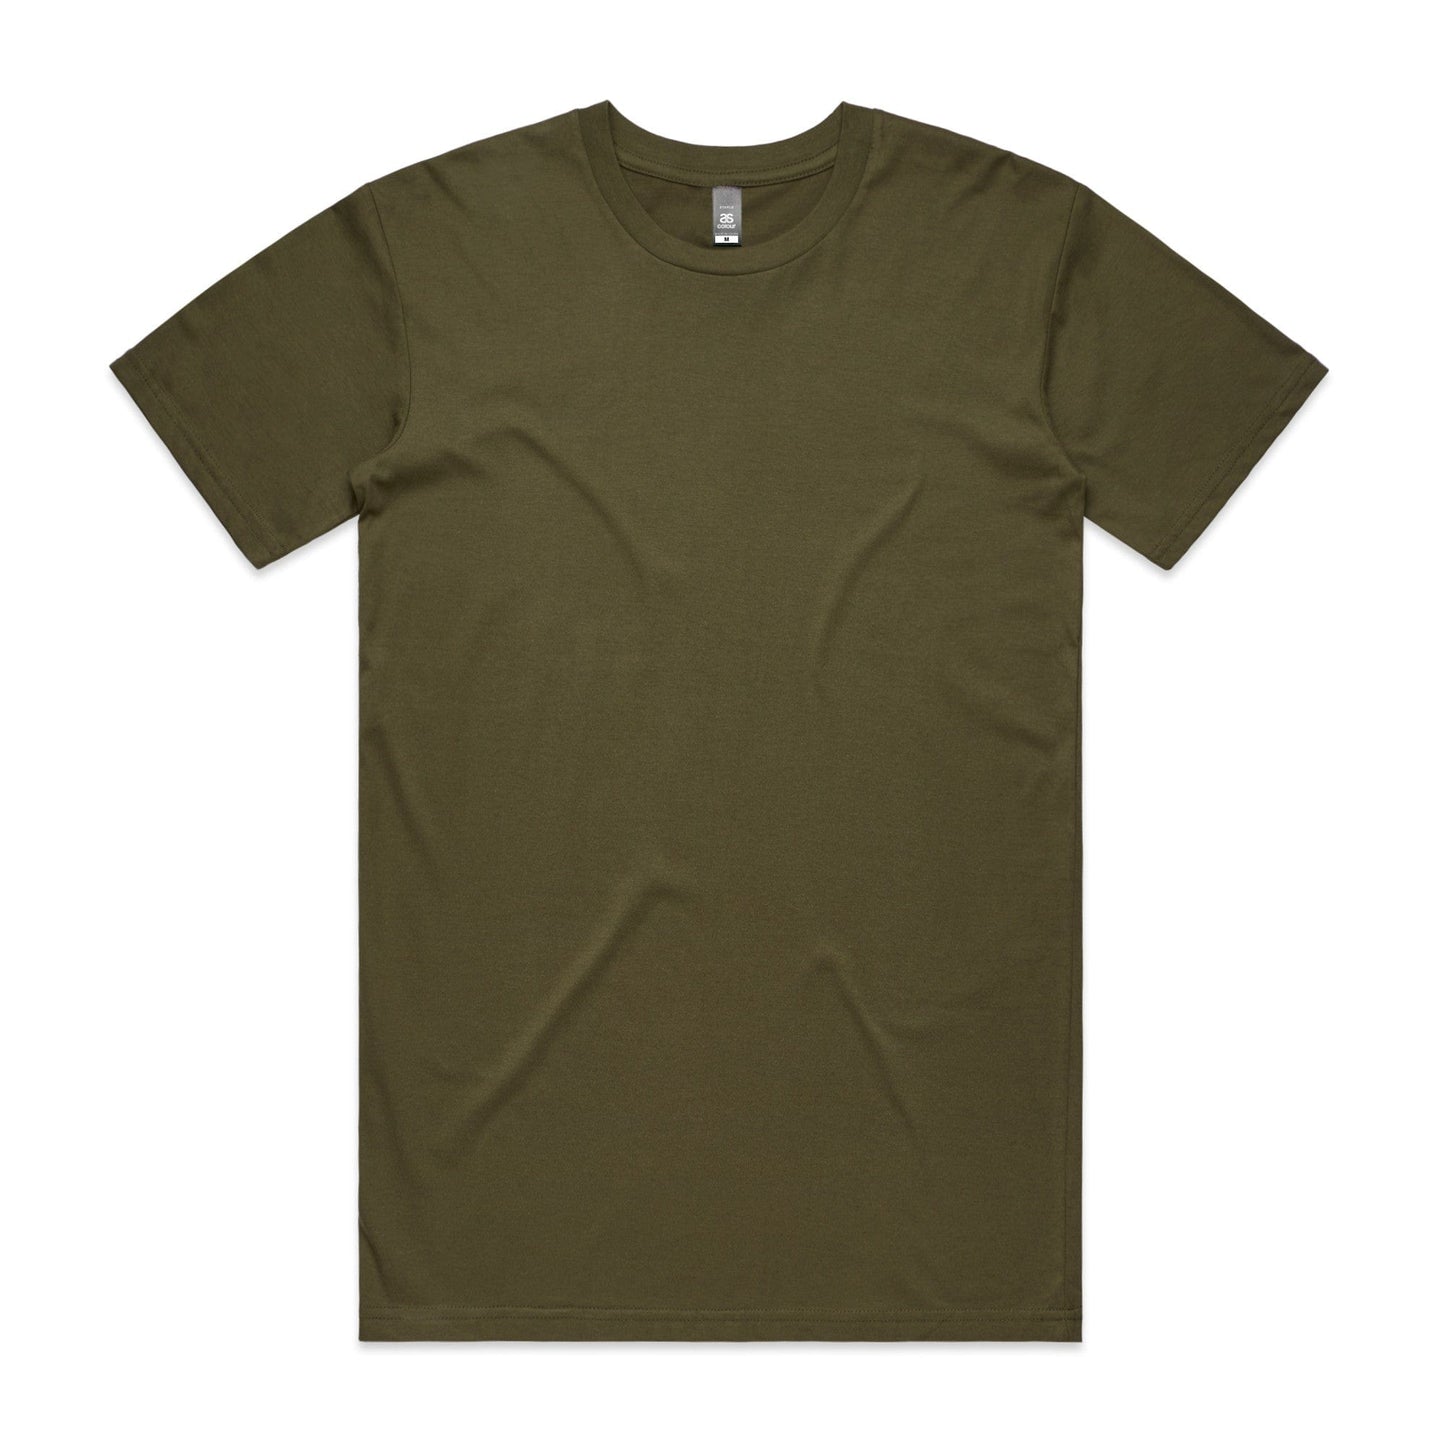 My Custom Design Physical product T-shirt | Crew neck